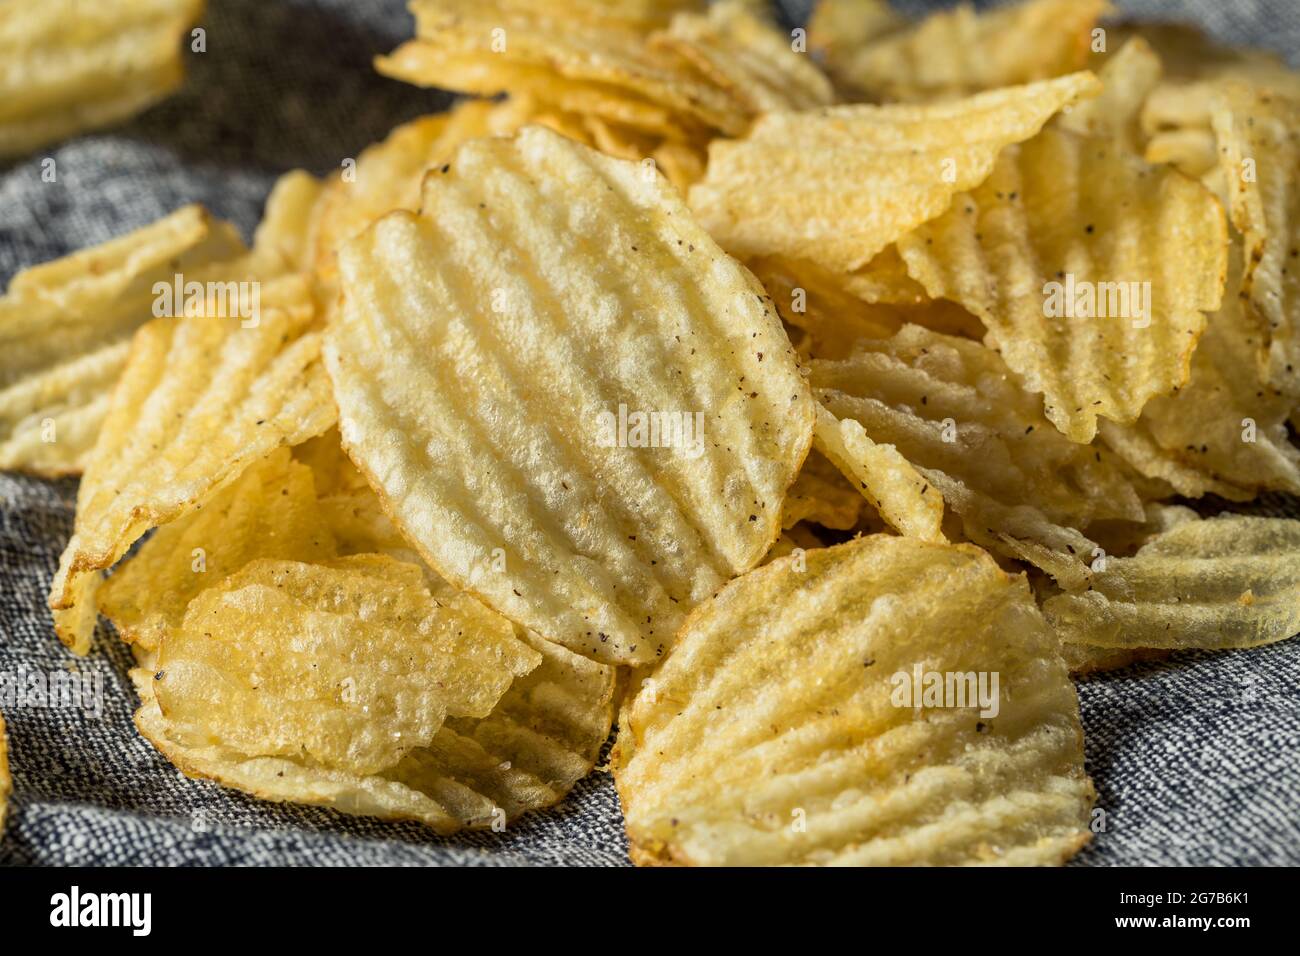 Fettige Kartoffelchips mit Rüschen, verzehrfertig Stockfoto